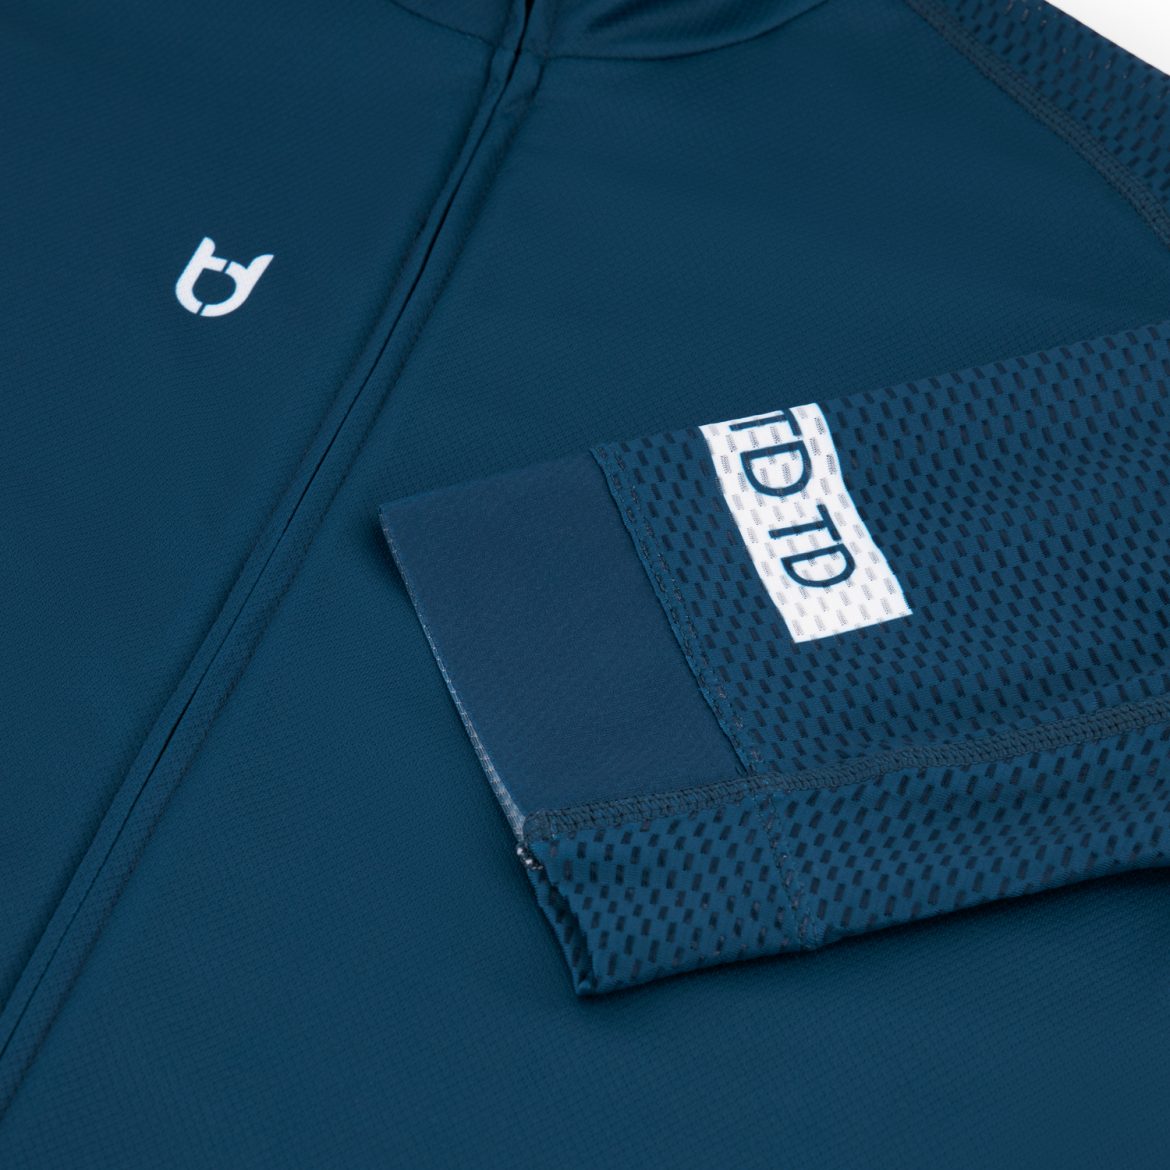 Mesh sleeve detail photo of a dark blue TD sportswear cycling jersey